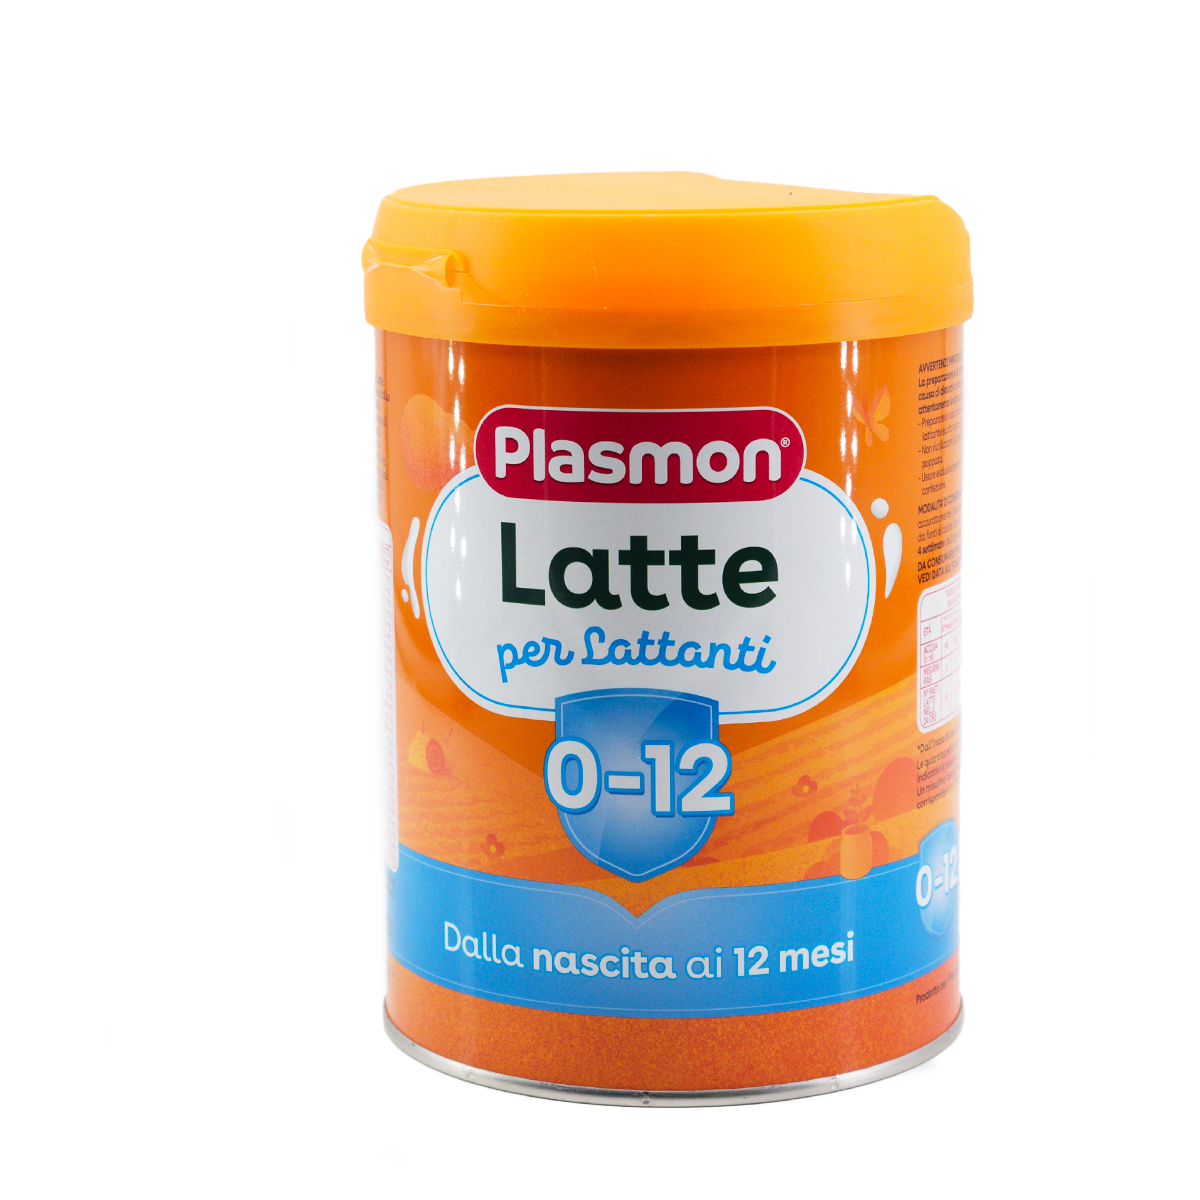 Plasmon Latte Liquido per Lattanti 0-12 Mesi Offerta 6 Confezioni d